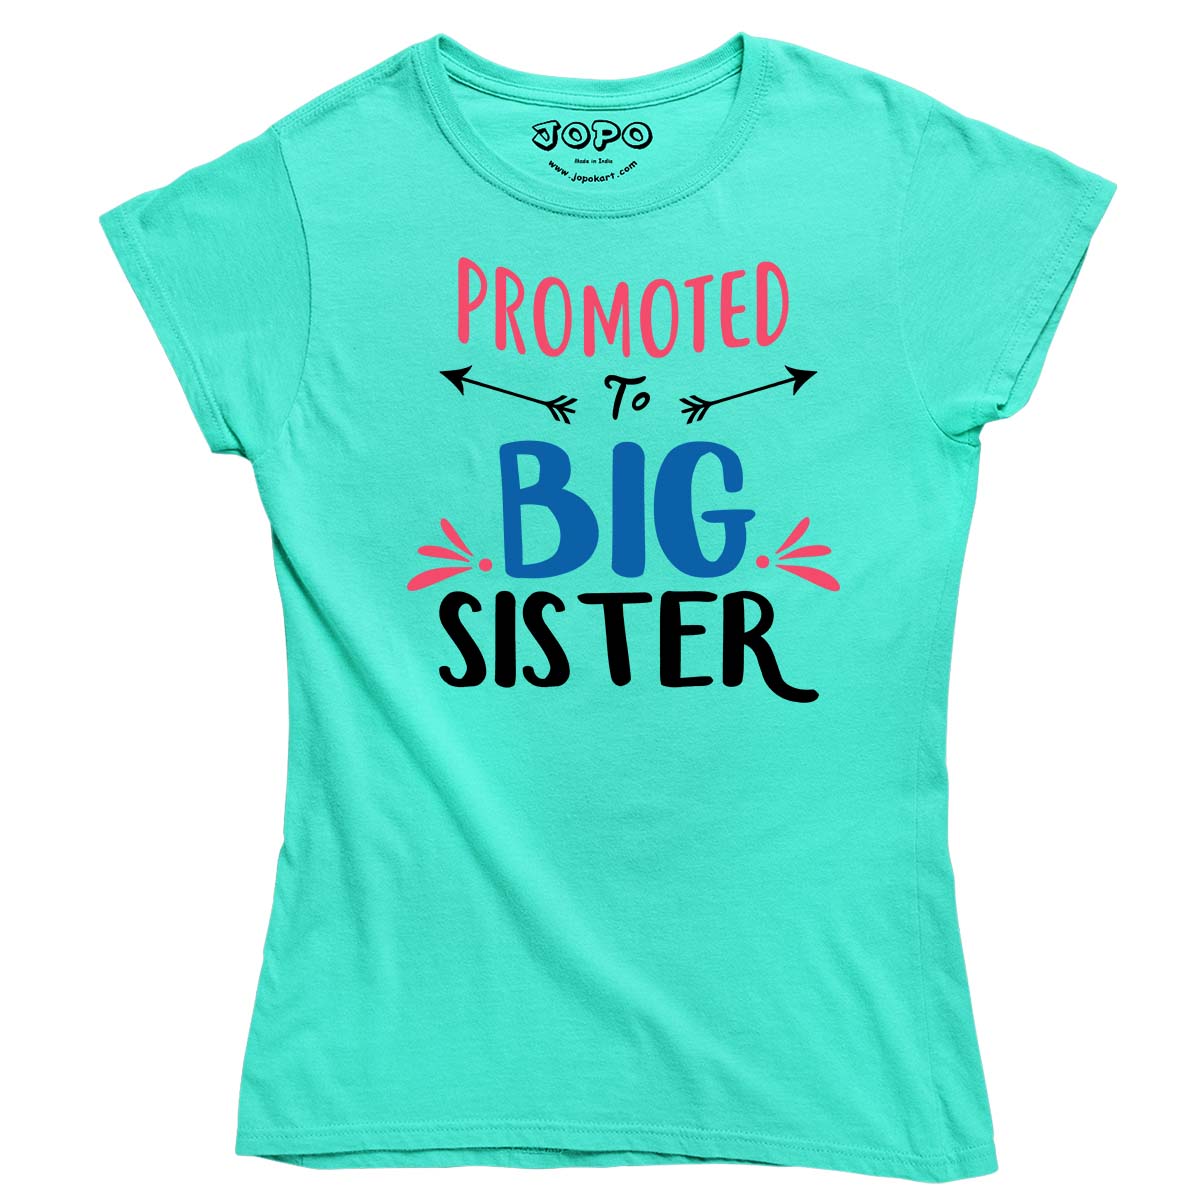 Promoted to big Sister aqua blue